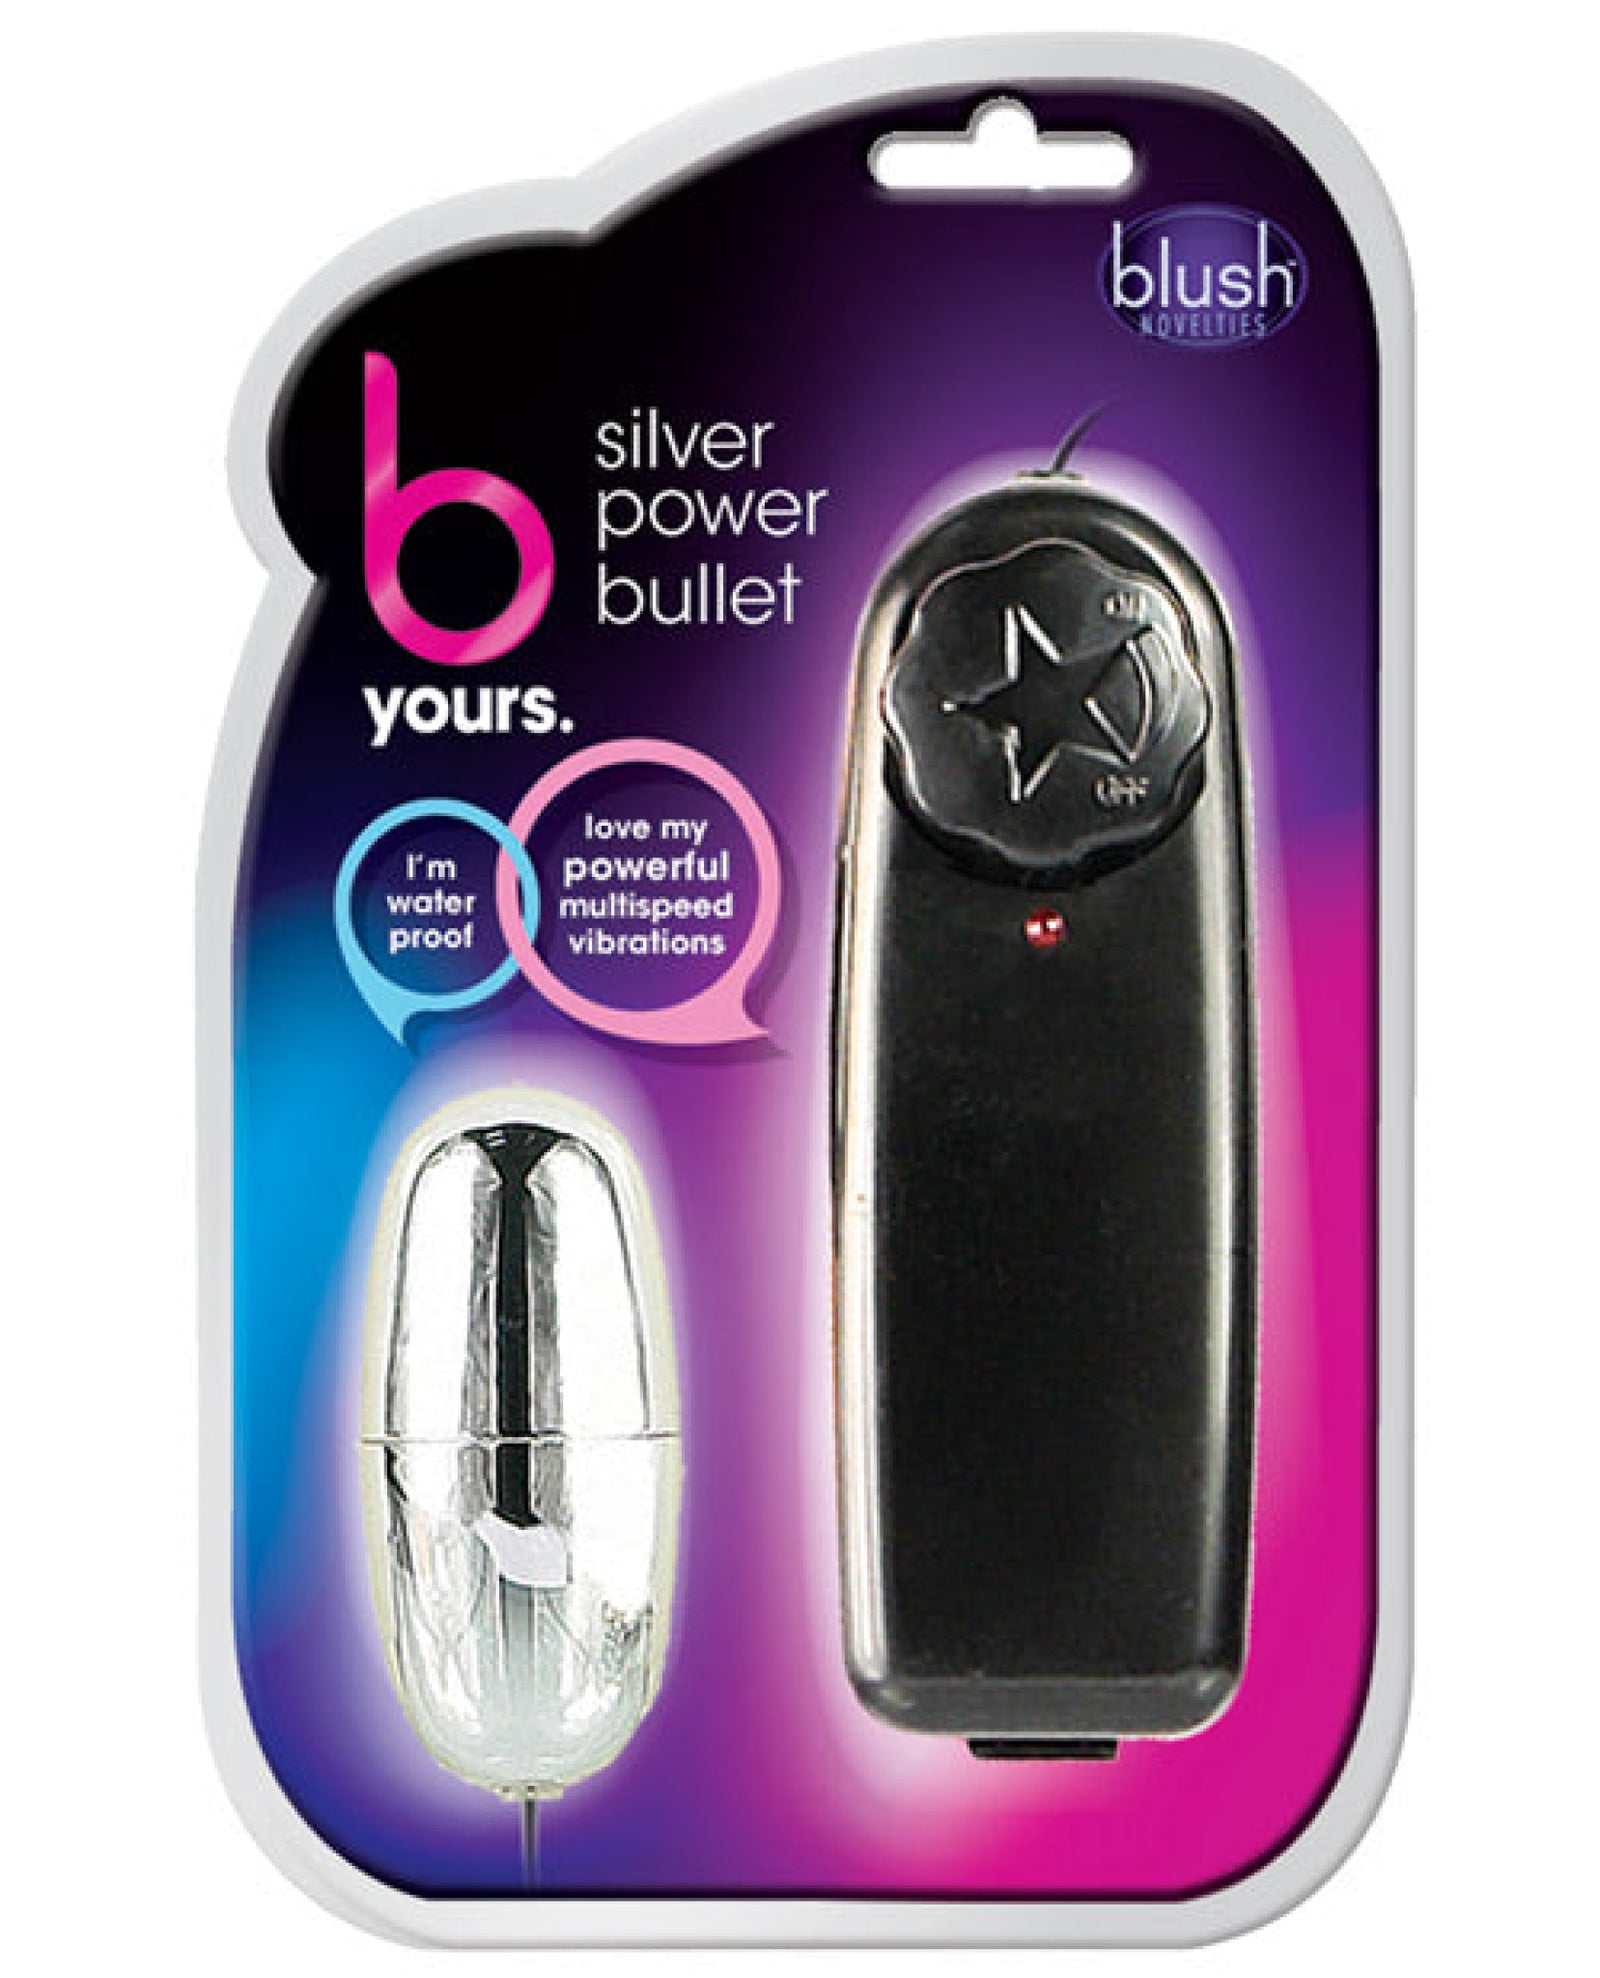 Blush B Yours Silver Power Bullet Blush